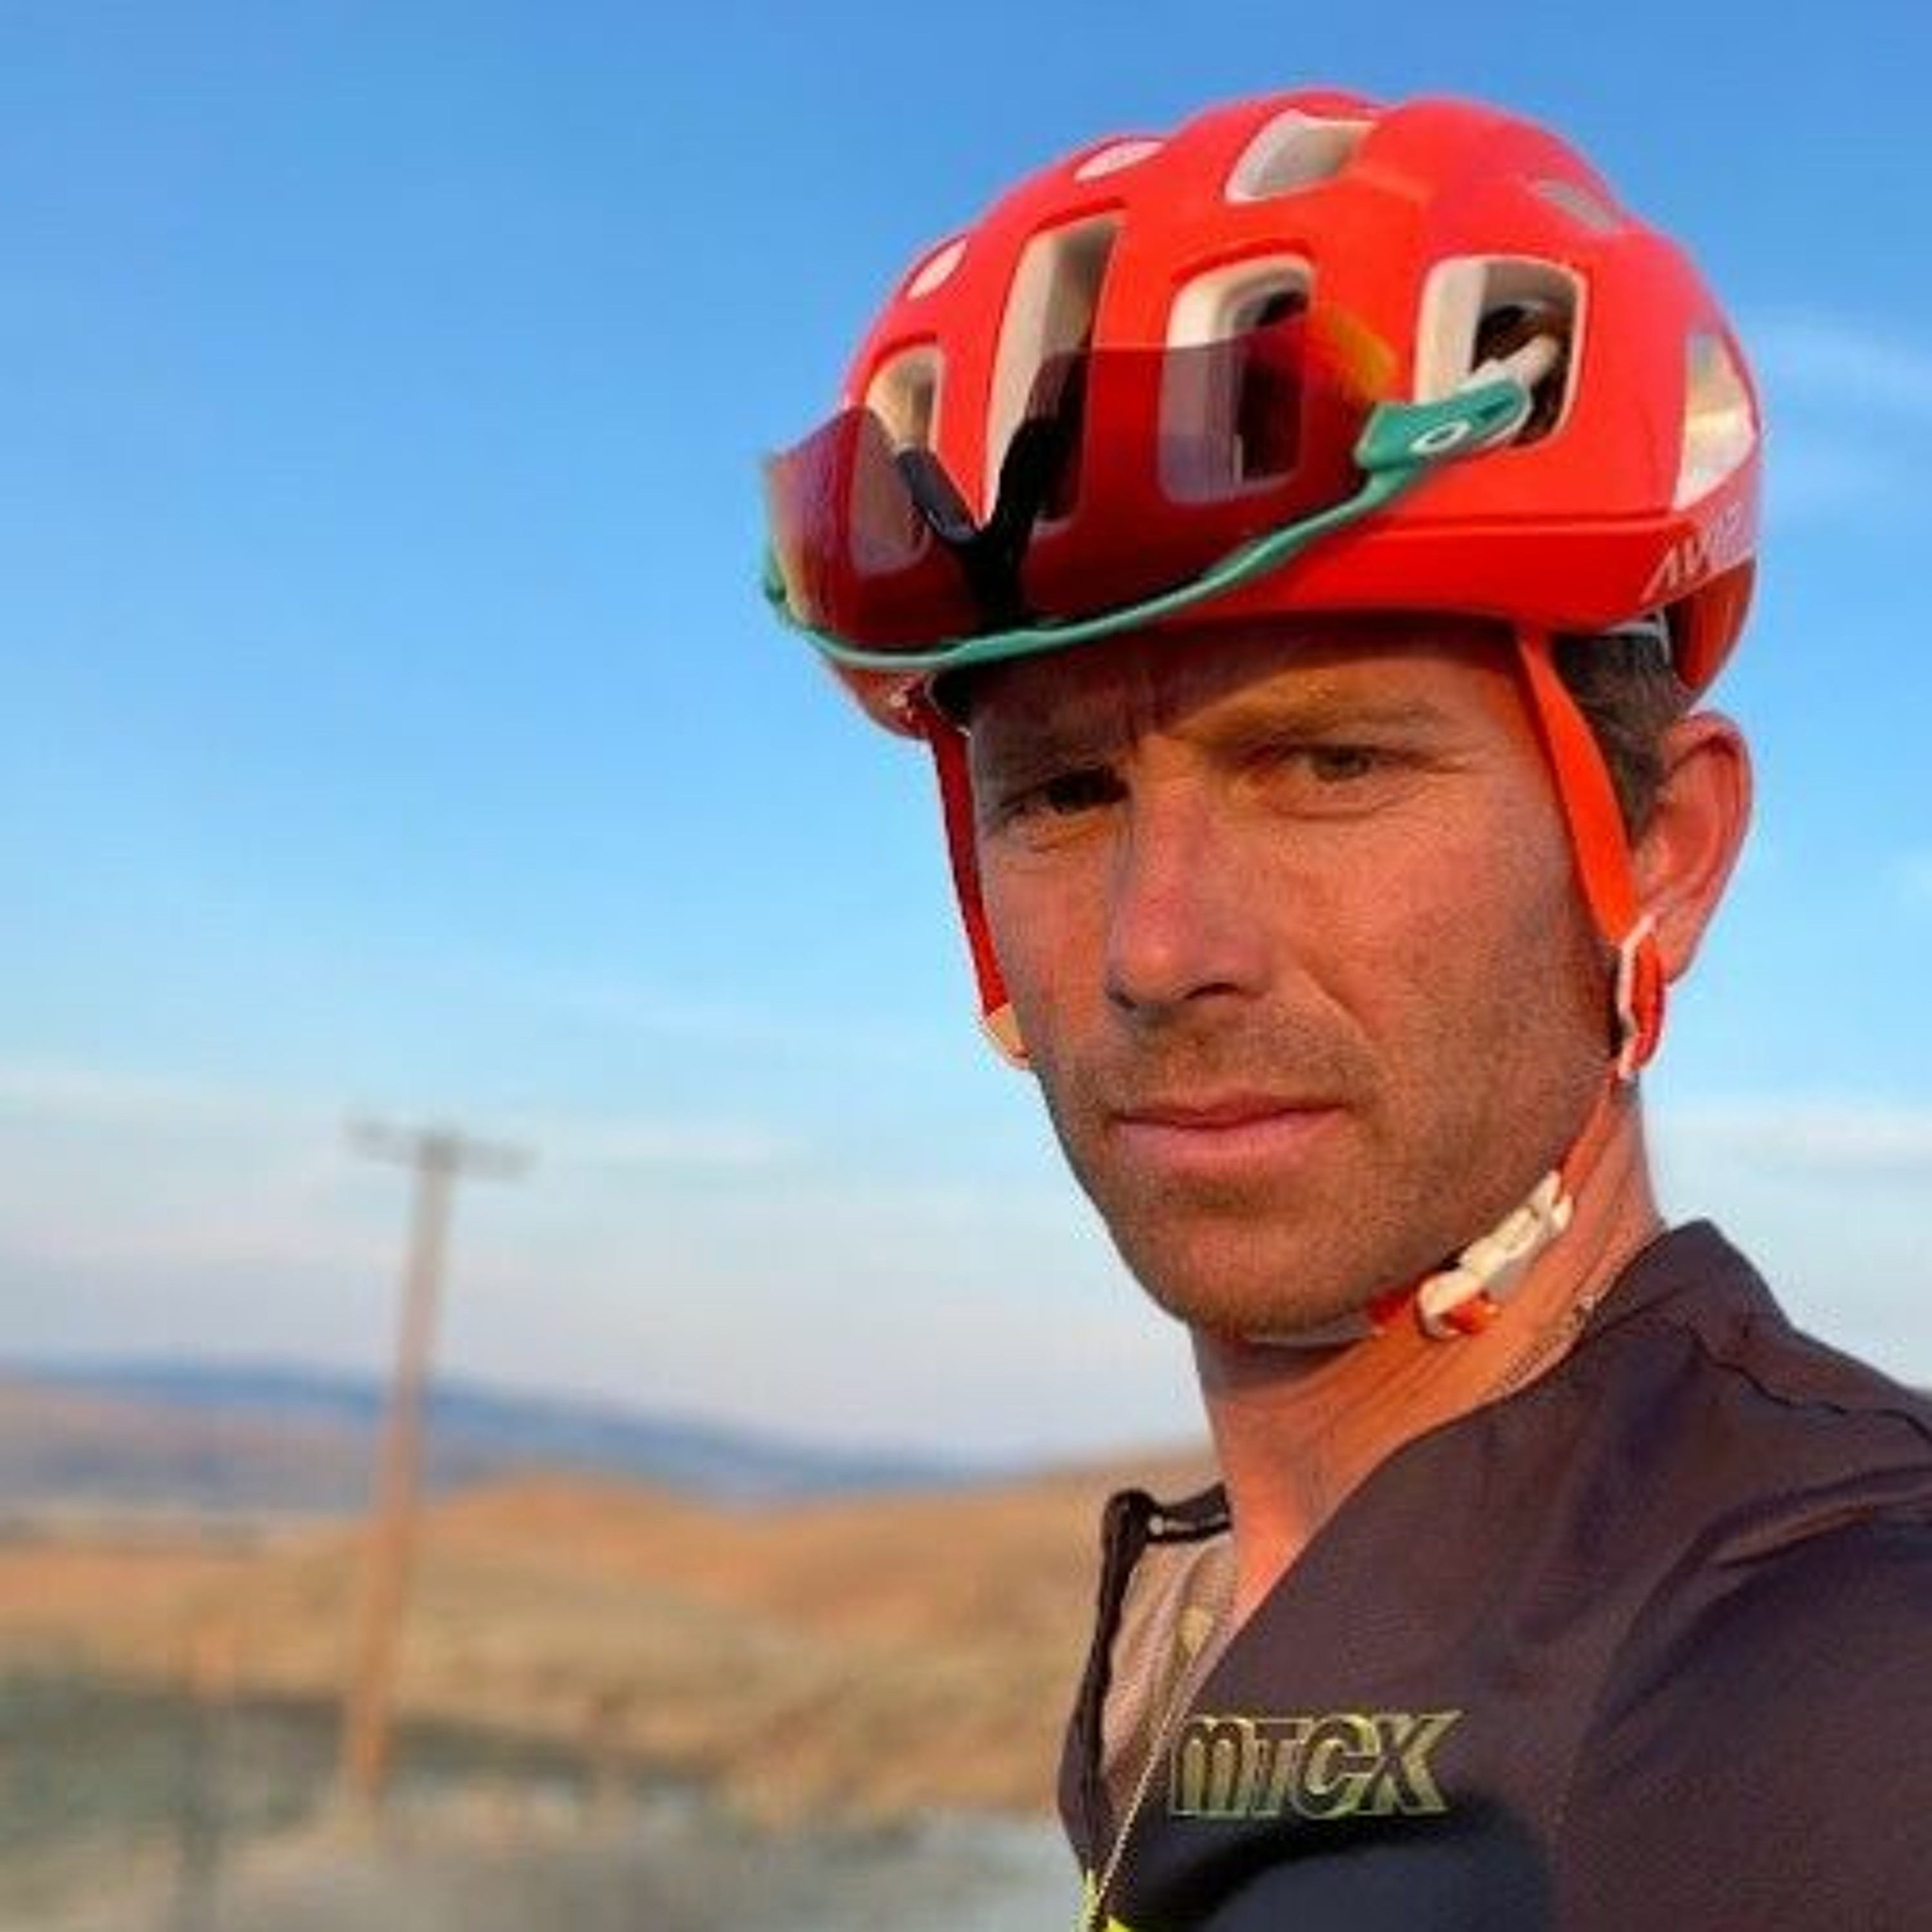 Shaun Radley on bike racing in Montana